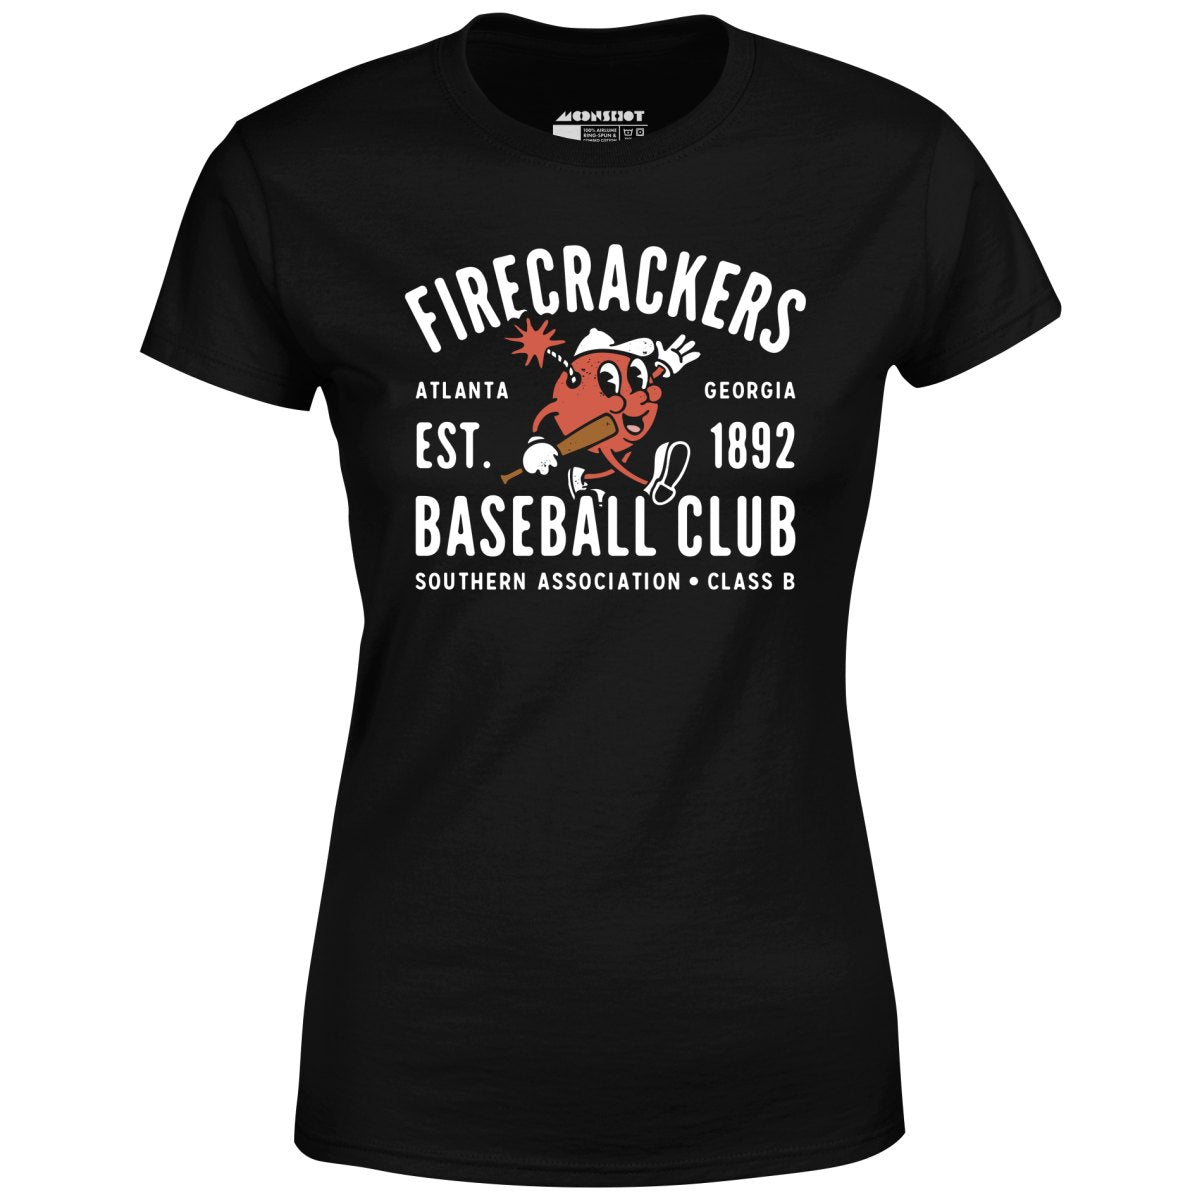 Atlanta Firecrackers - Georgia - Vintage Defunct Baseball Teams - Women's T-Shirt